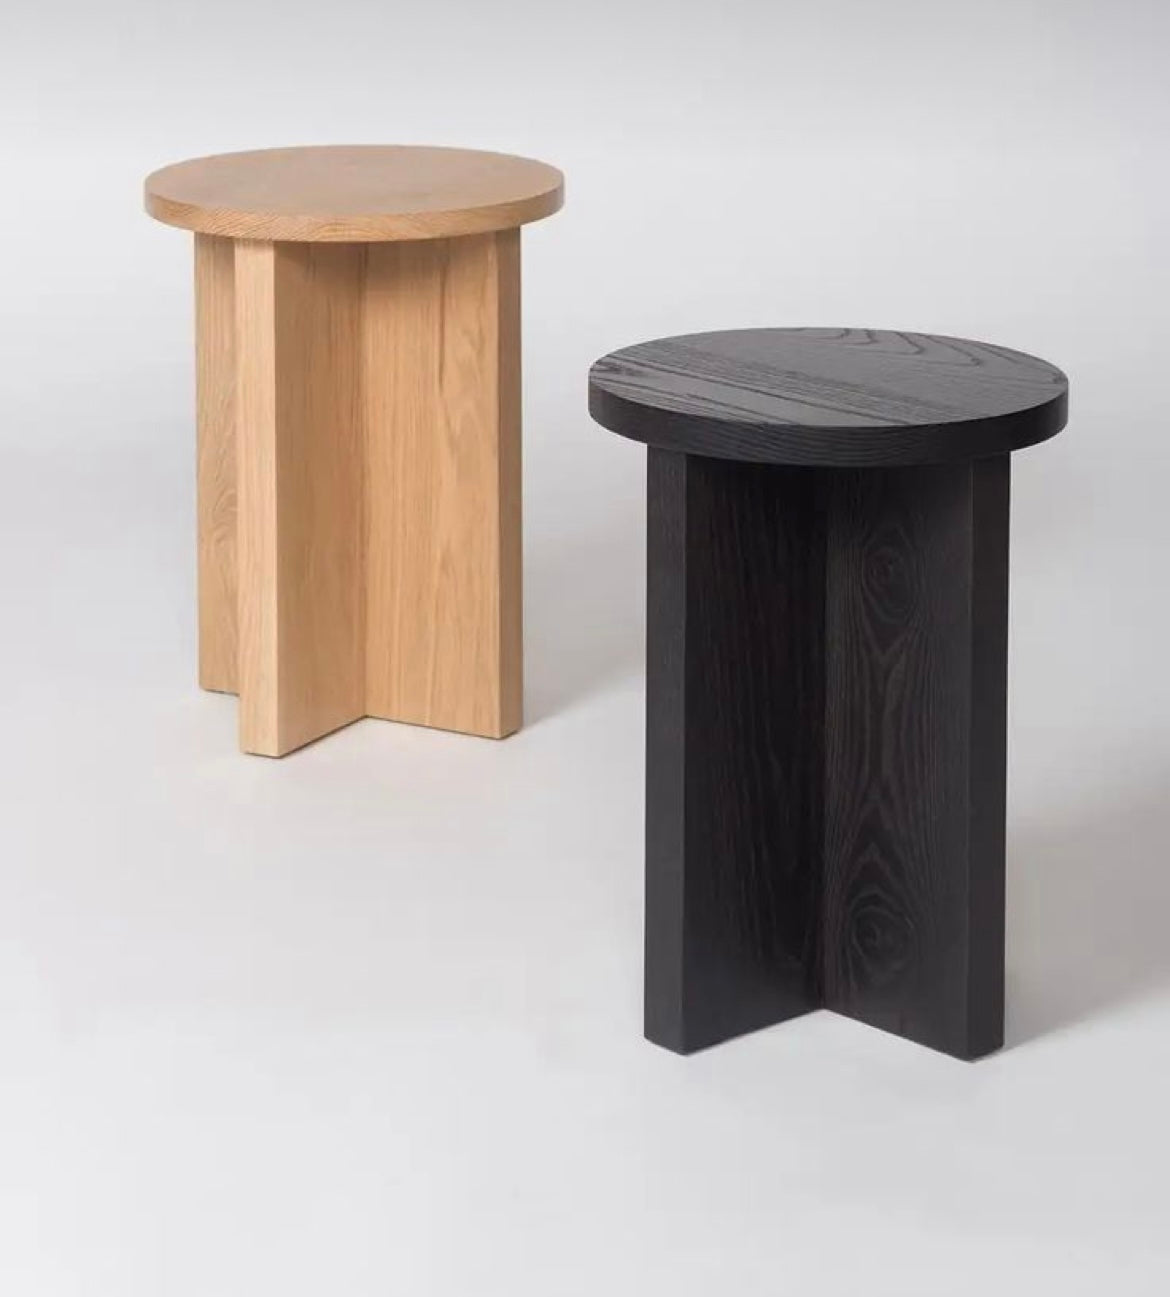 OAK FUSION oak stool